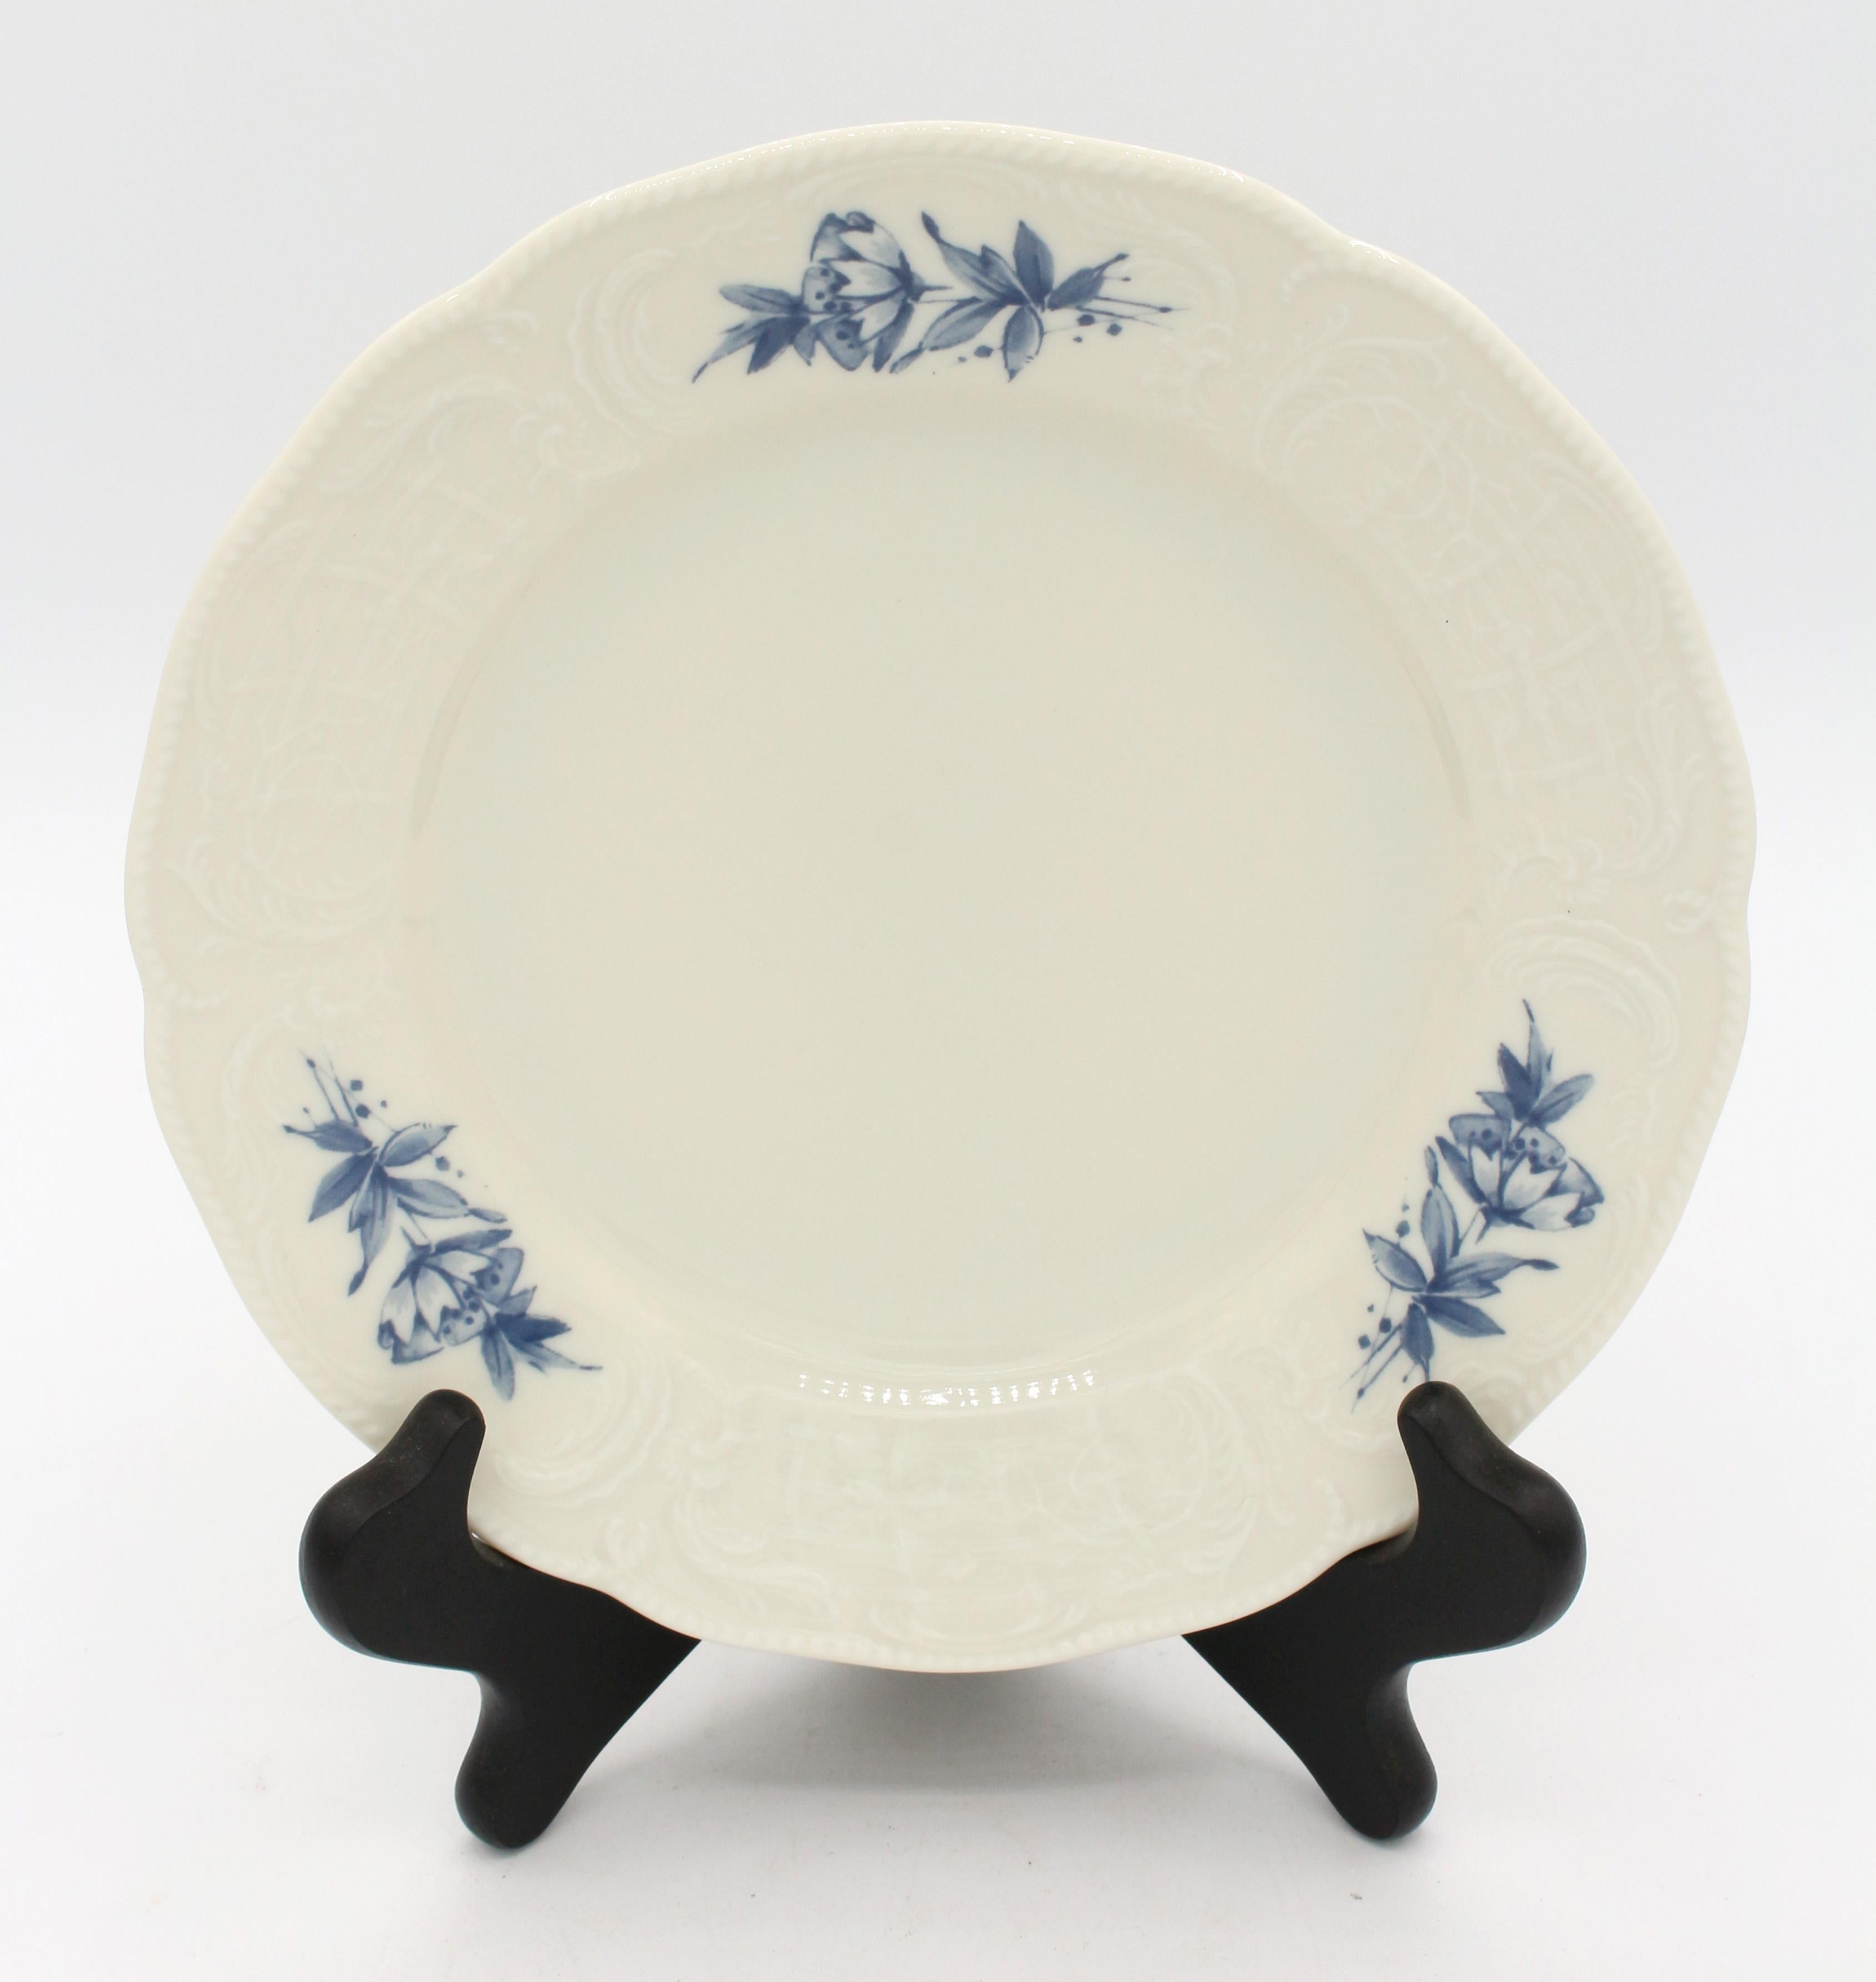 Vintage Rosenthal Sanssouci (R448) service for 16. A rare variation among the Sanssouci designs. 16 dinner plates, 16 salad plates, 16 dessert plates & 16 cups & saucers. Dinner plates: 9 3/4